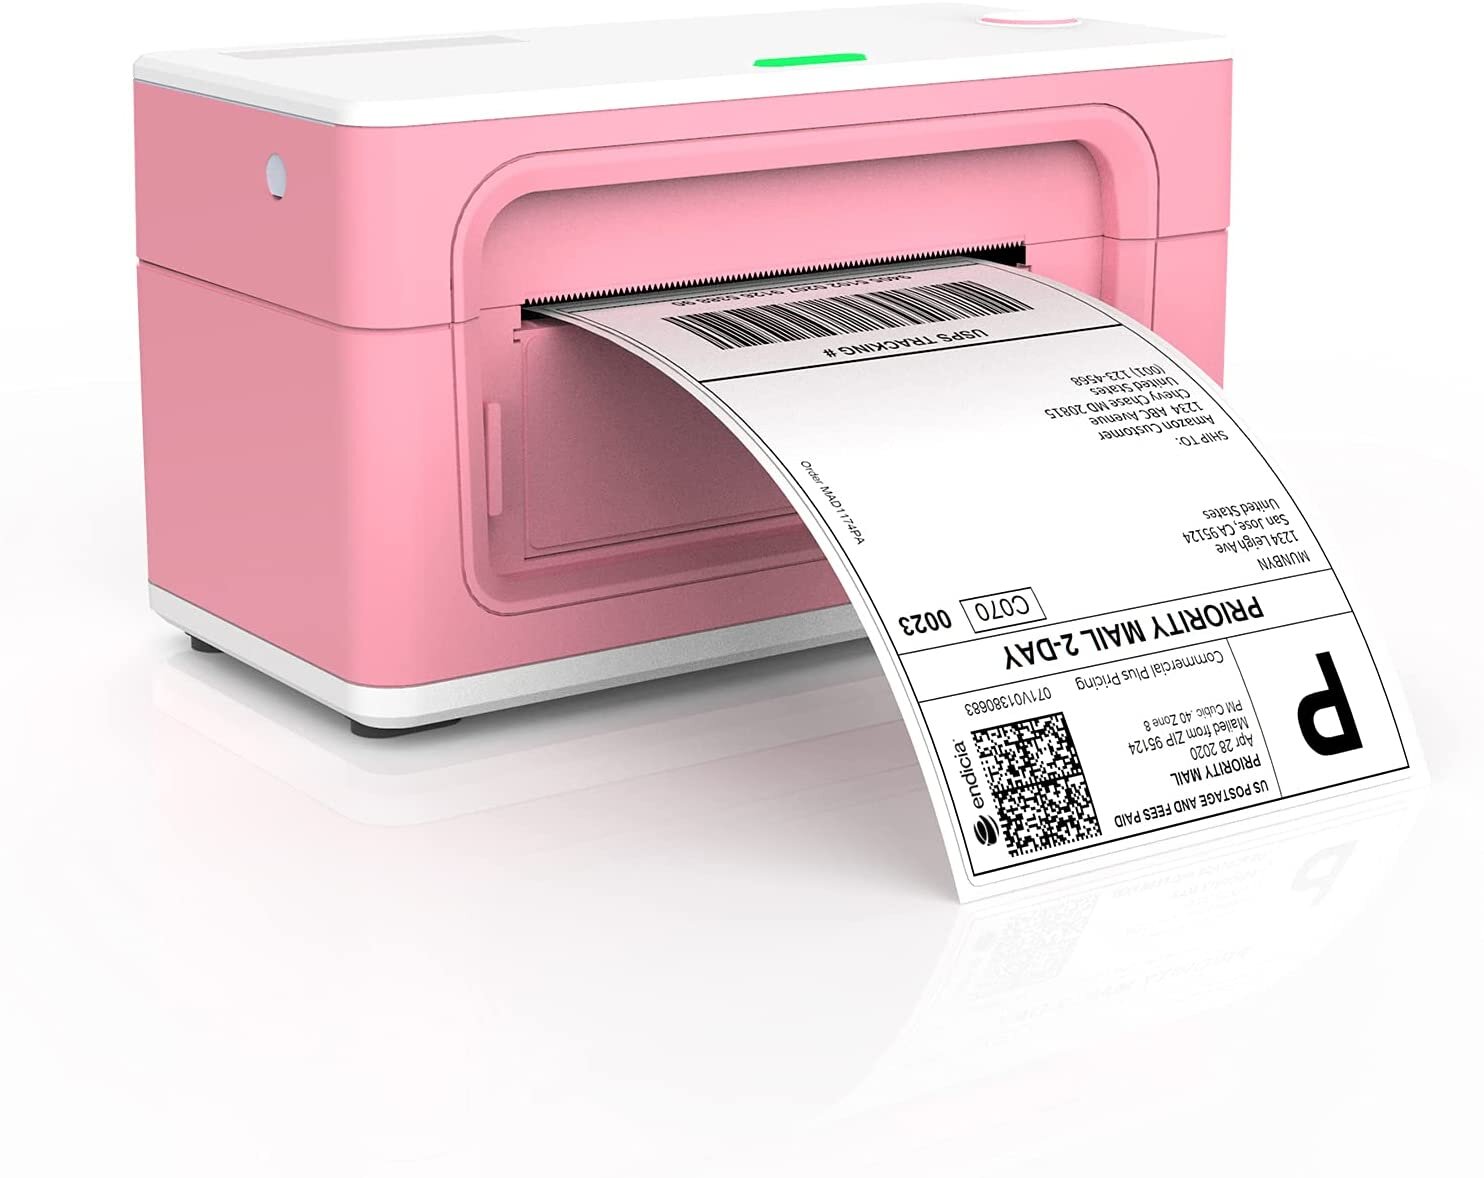 Pink Label Printer.jpg